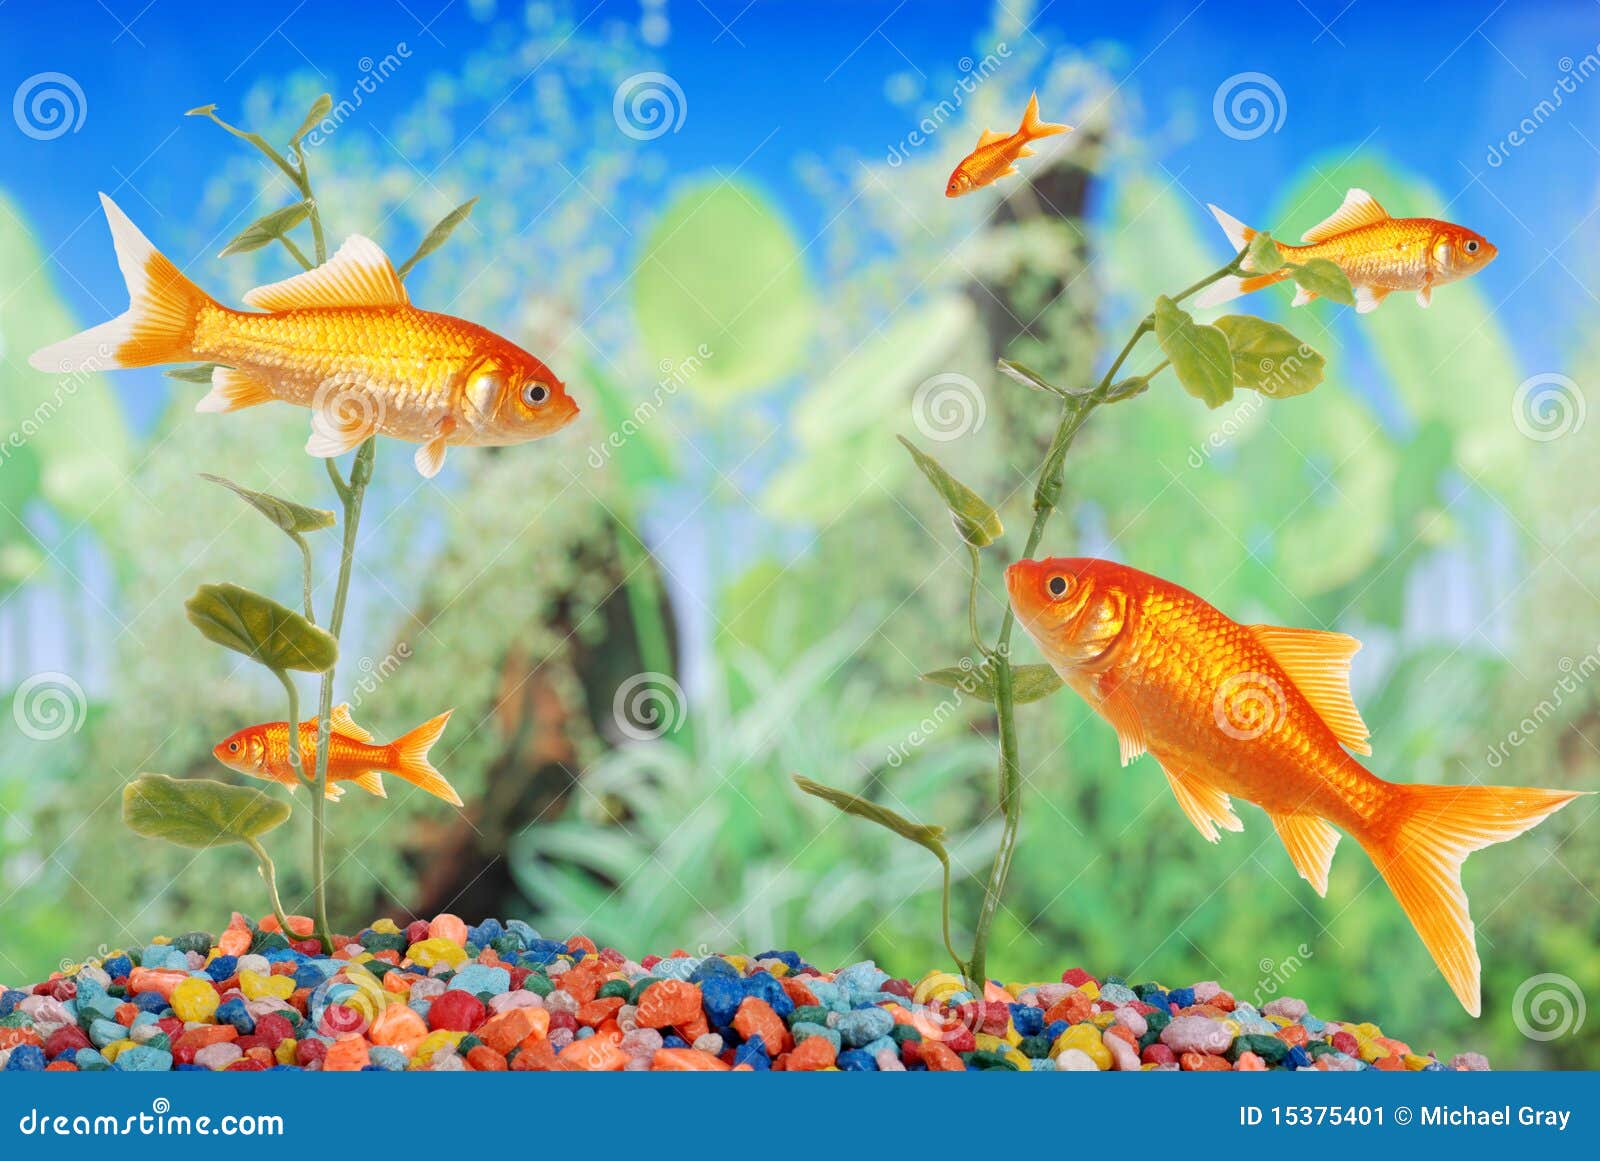 fish tank with goldfish